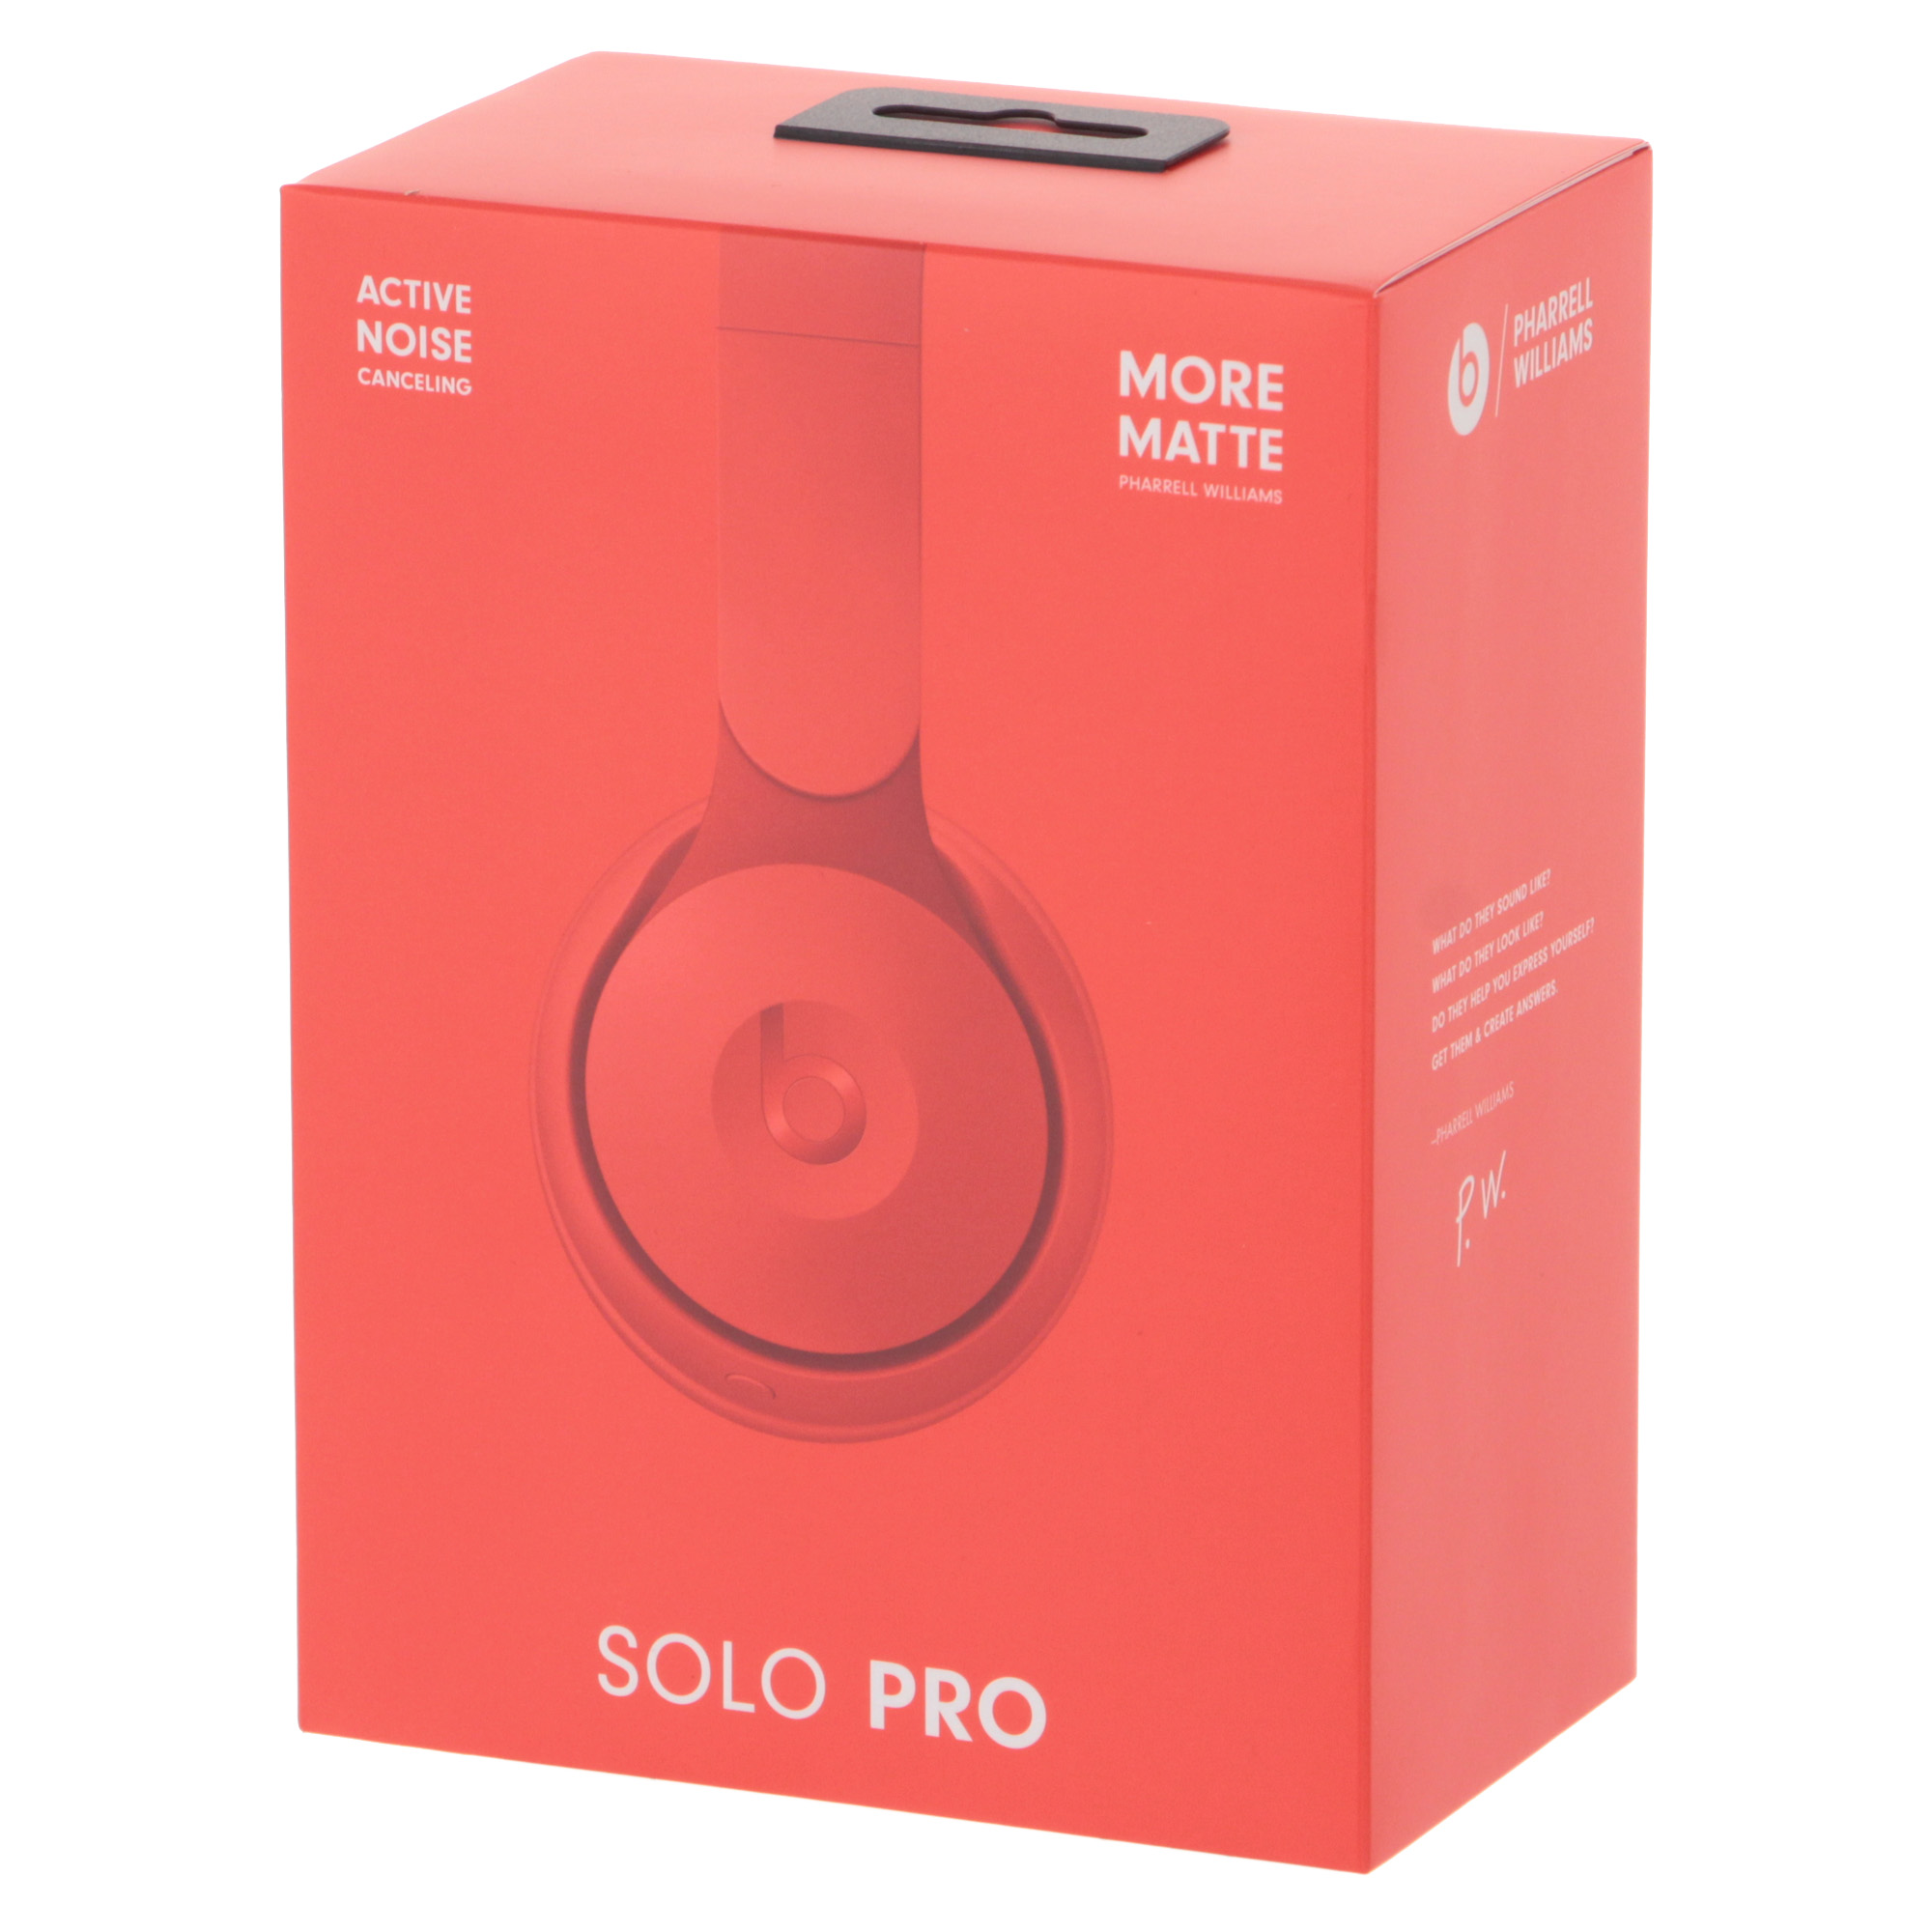 Наушники накладные Bluetooth Beats Solo Pro Wireless Noise Cancelling MMC Red